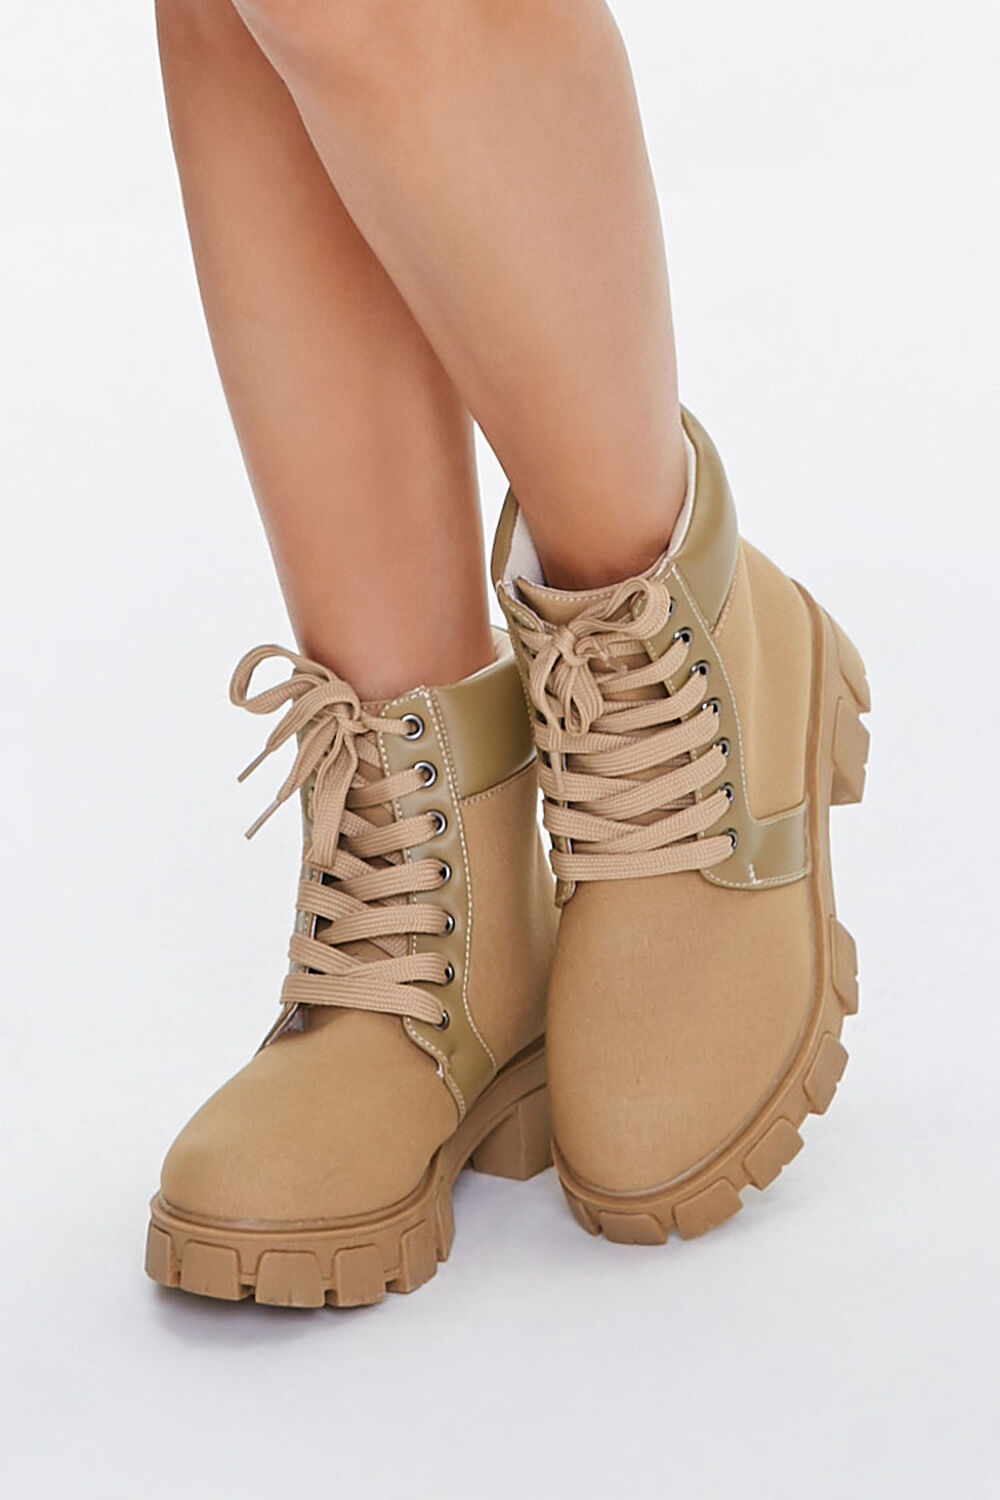 KHAKI Lug Sole Lace-Up Ankle Boots, image 1